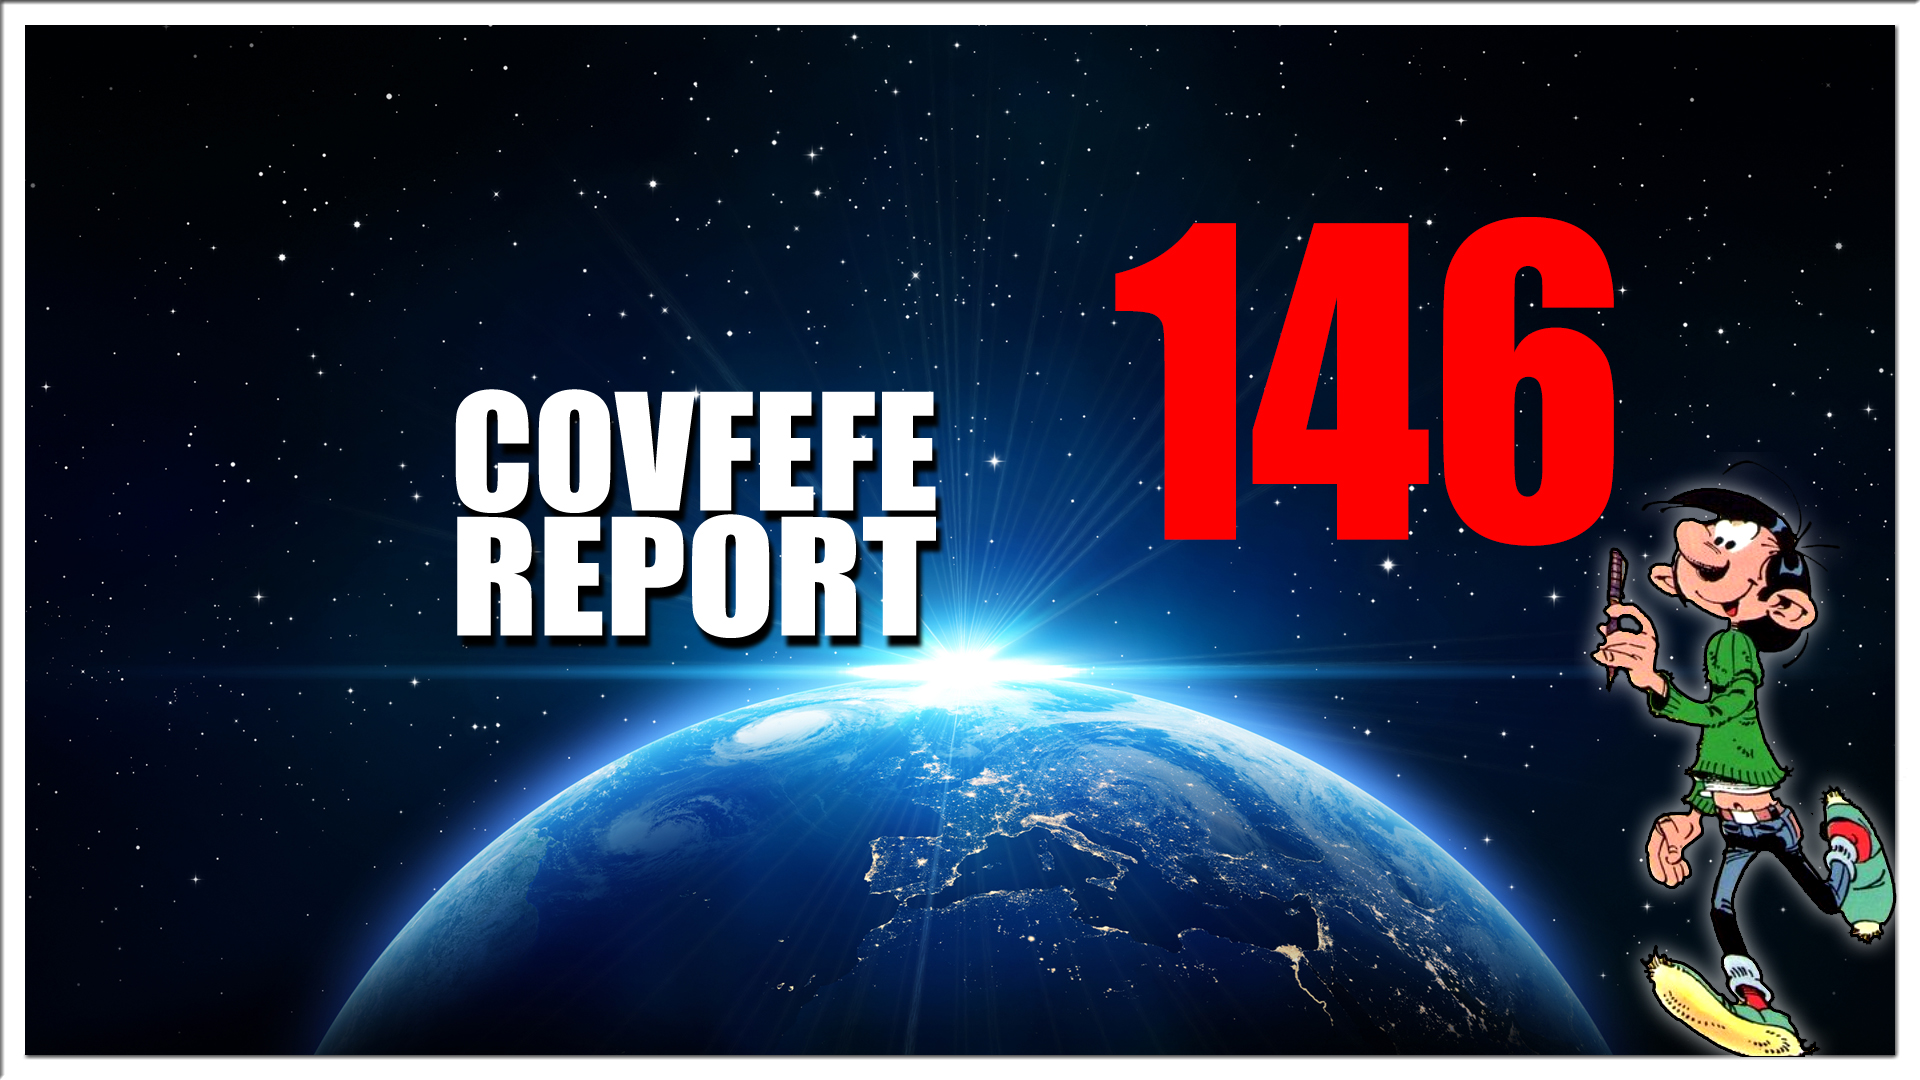 Covfefe Report 146. Adrenochrome, Madonna, Spacey, Stone, Oprah, Steinem, Bale, American Beauty